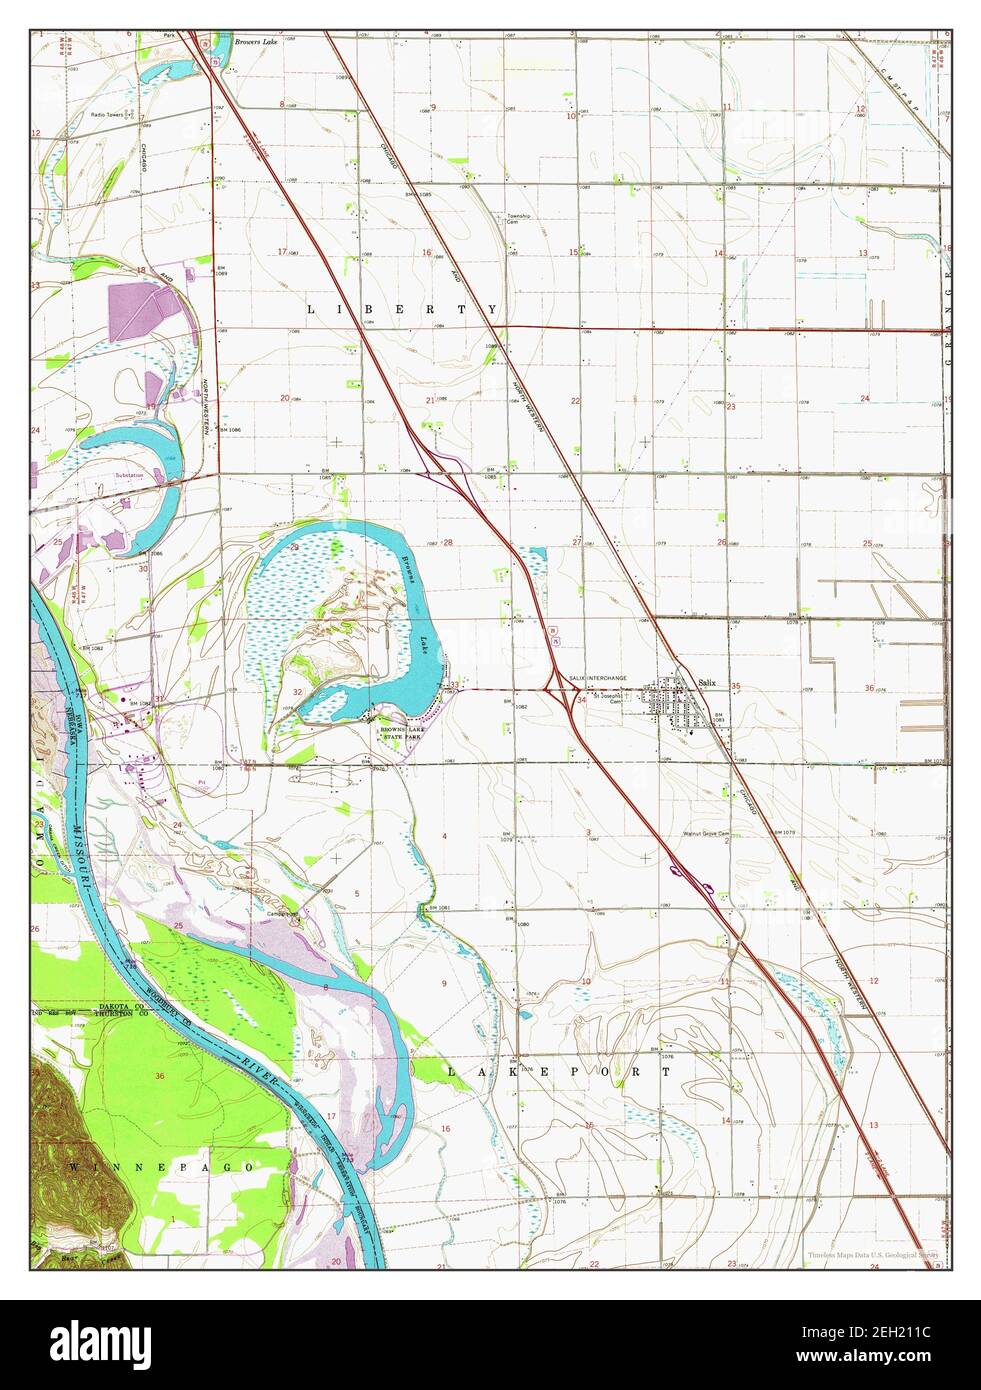 Salix, Iowa, map 1964, 1:24000, United States of America by Timeless Maps, data U.S. Geological Survey Stock Photo